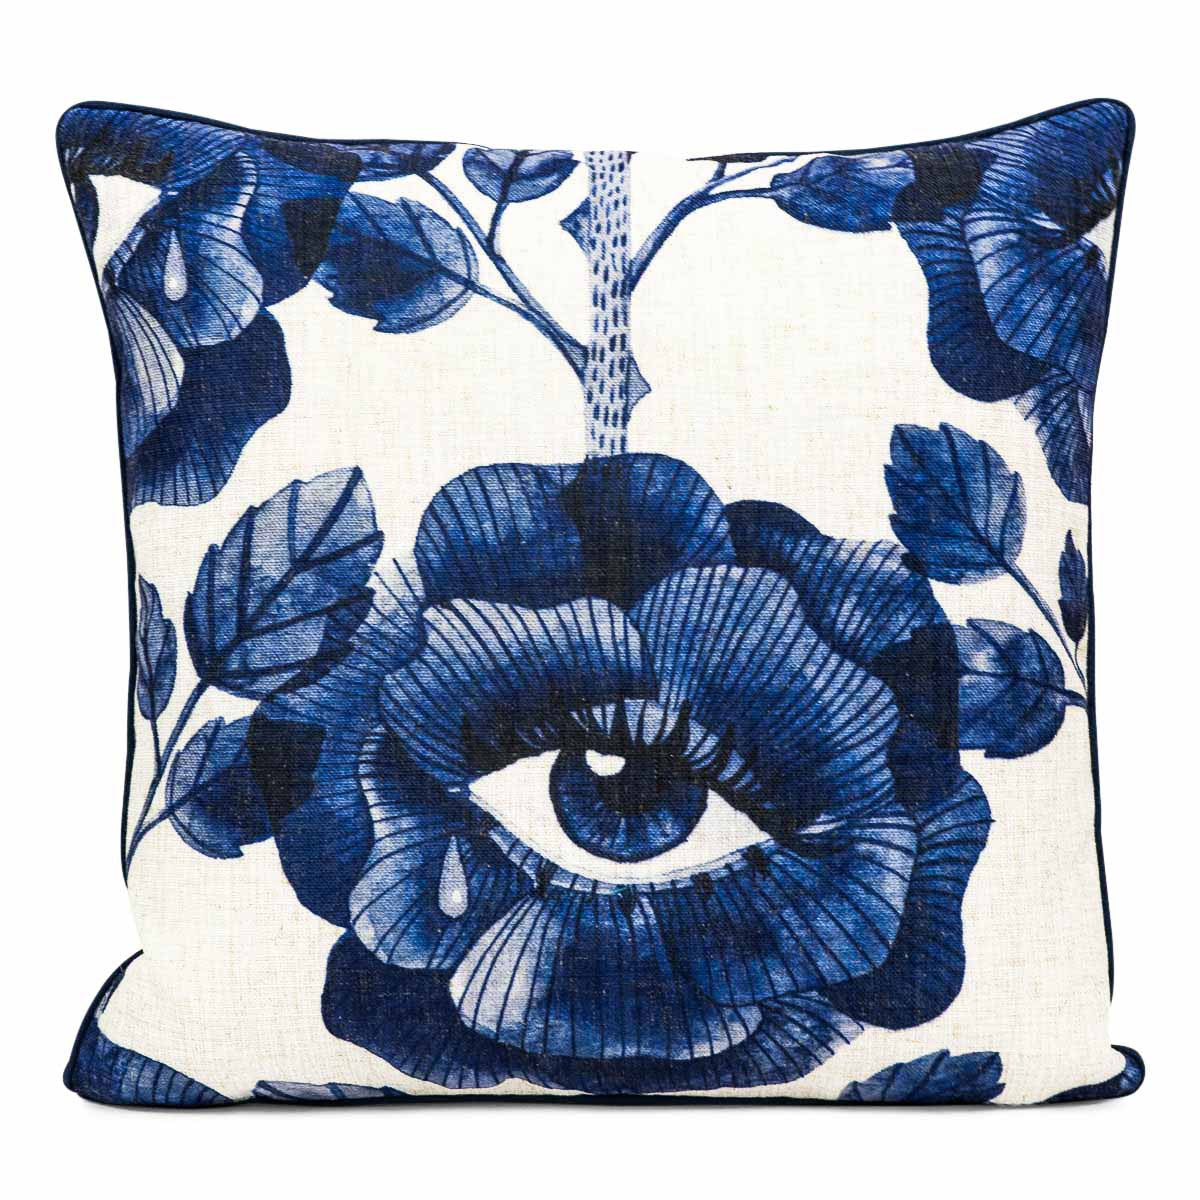 Floral Eyes Pillow in Navy Blue - ModShop1.com